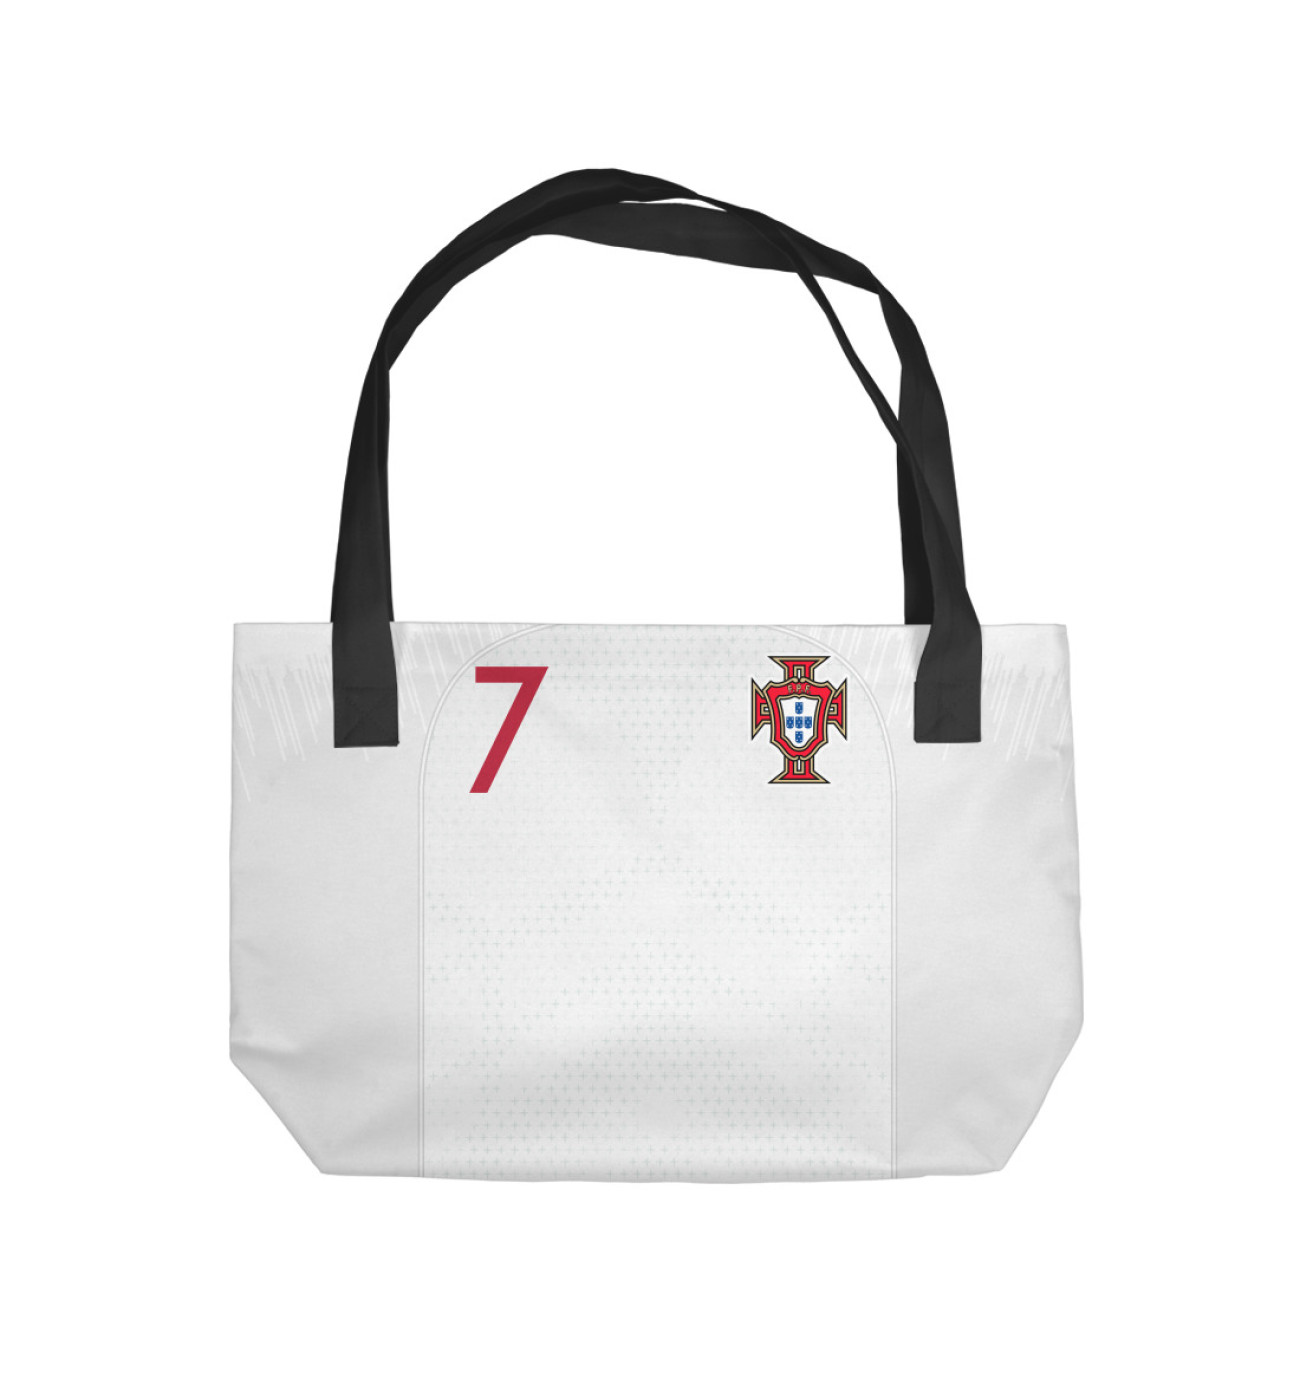 Пляжная сумка Сristiano Ronaldo, артикул: FTF-495876-sup